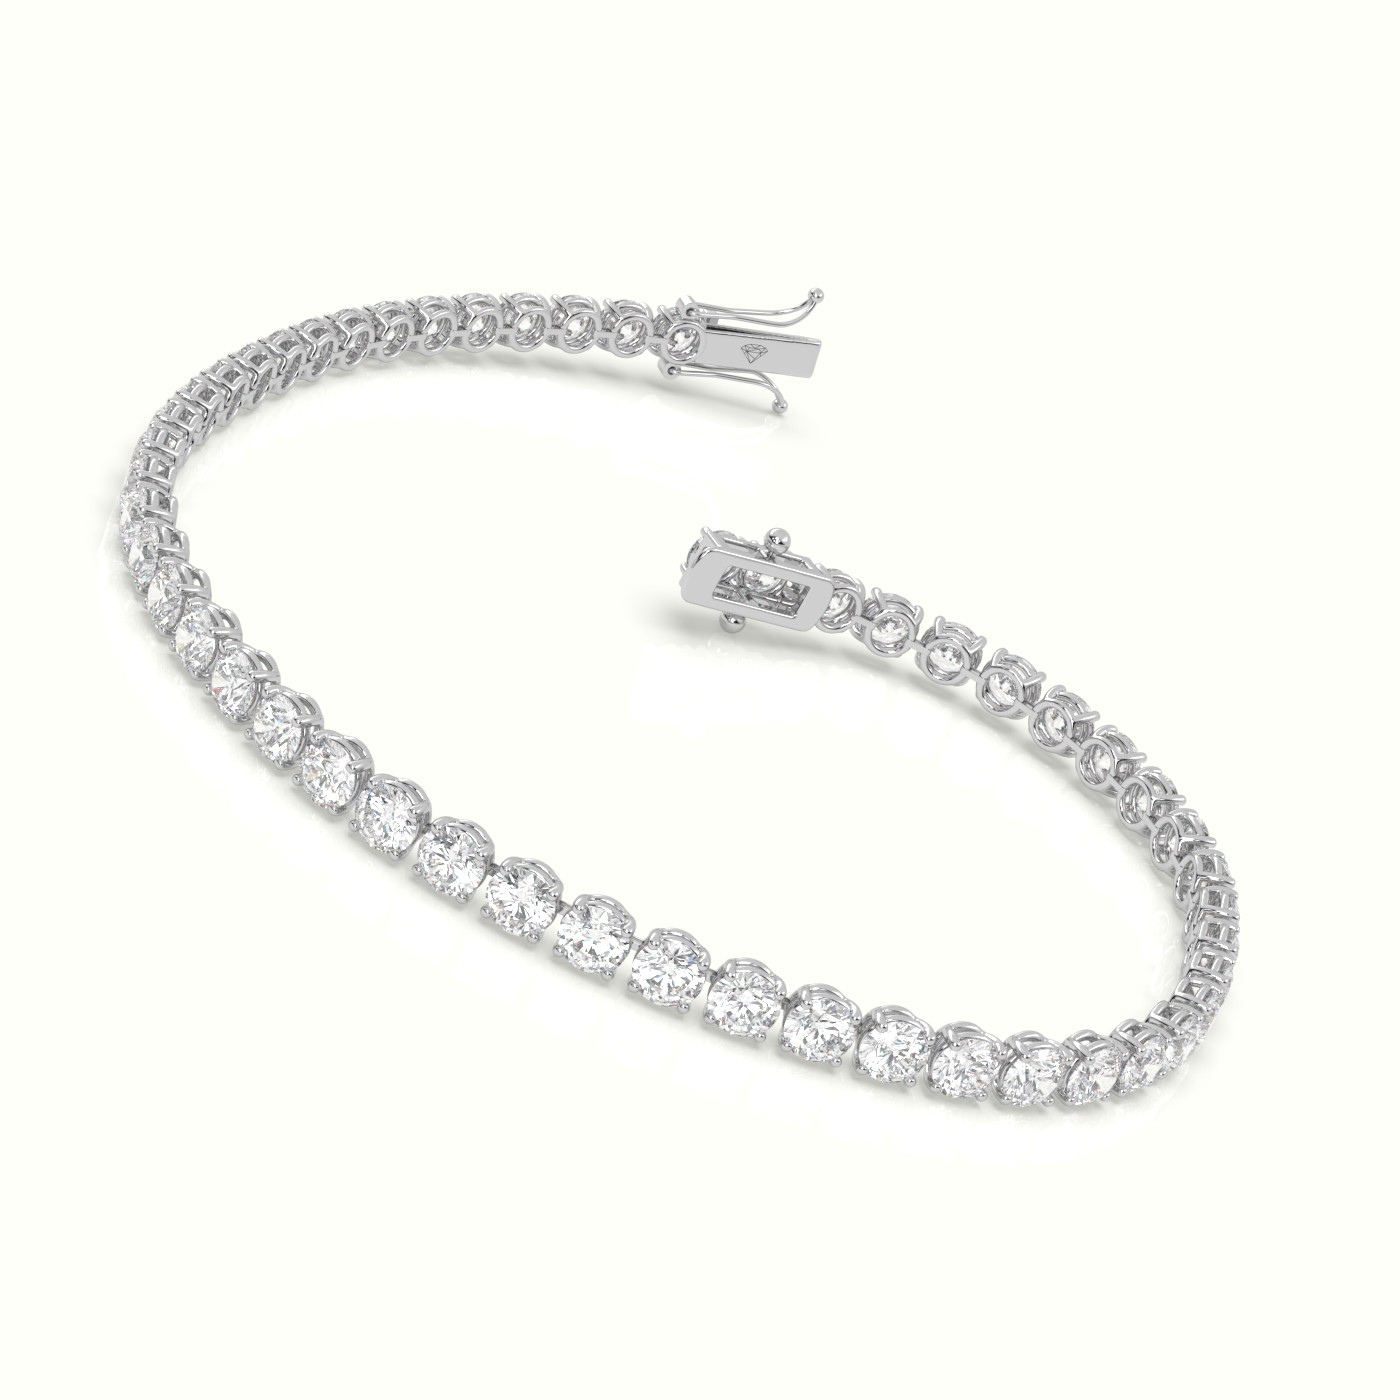 18k white gold  tennis bracelet 6.12 carat diamonds Photos & images